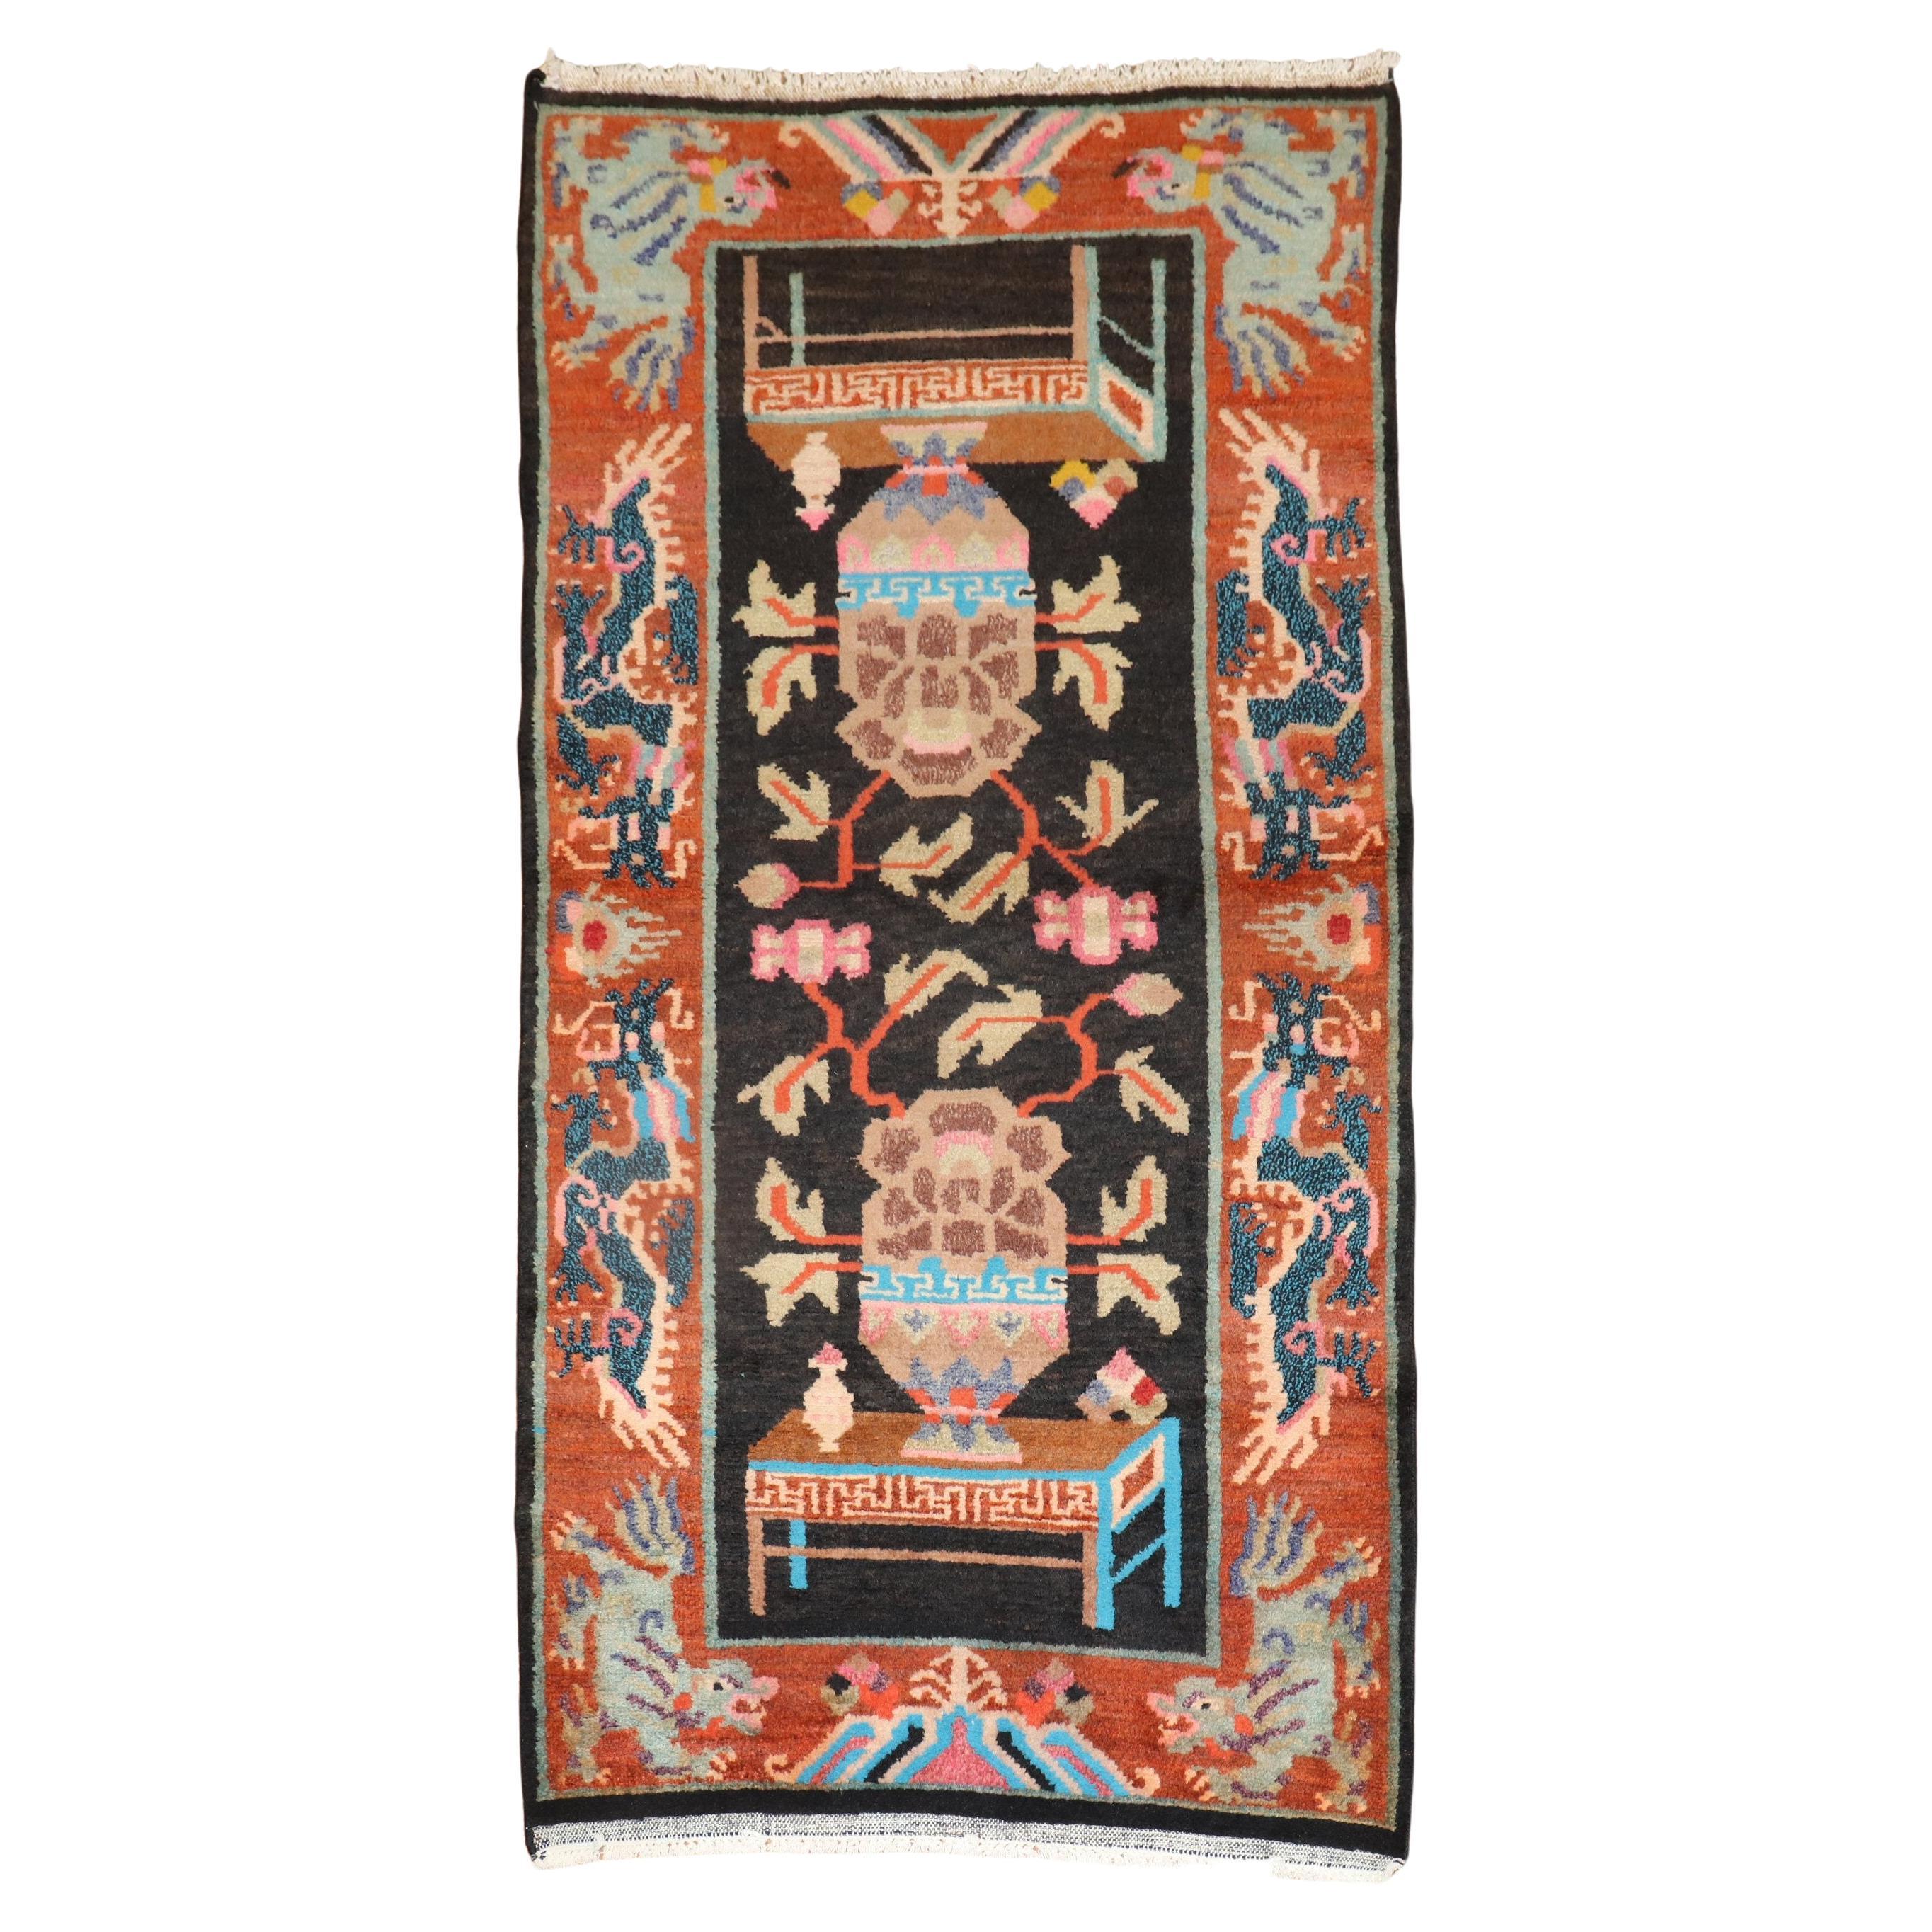 Skurriler Vintage-Tibet-Teppich